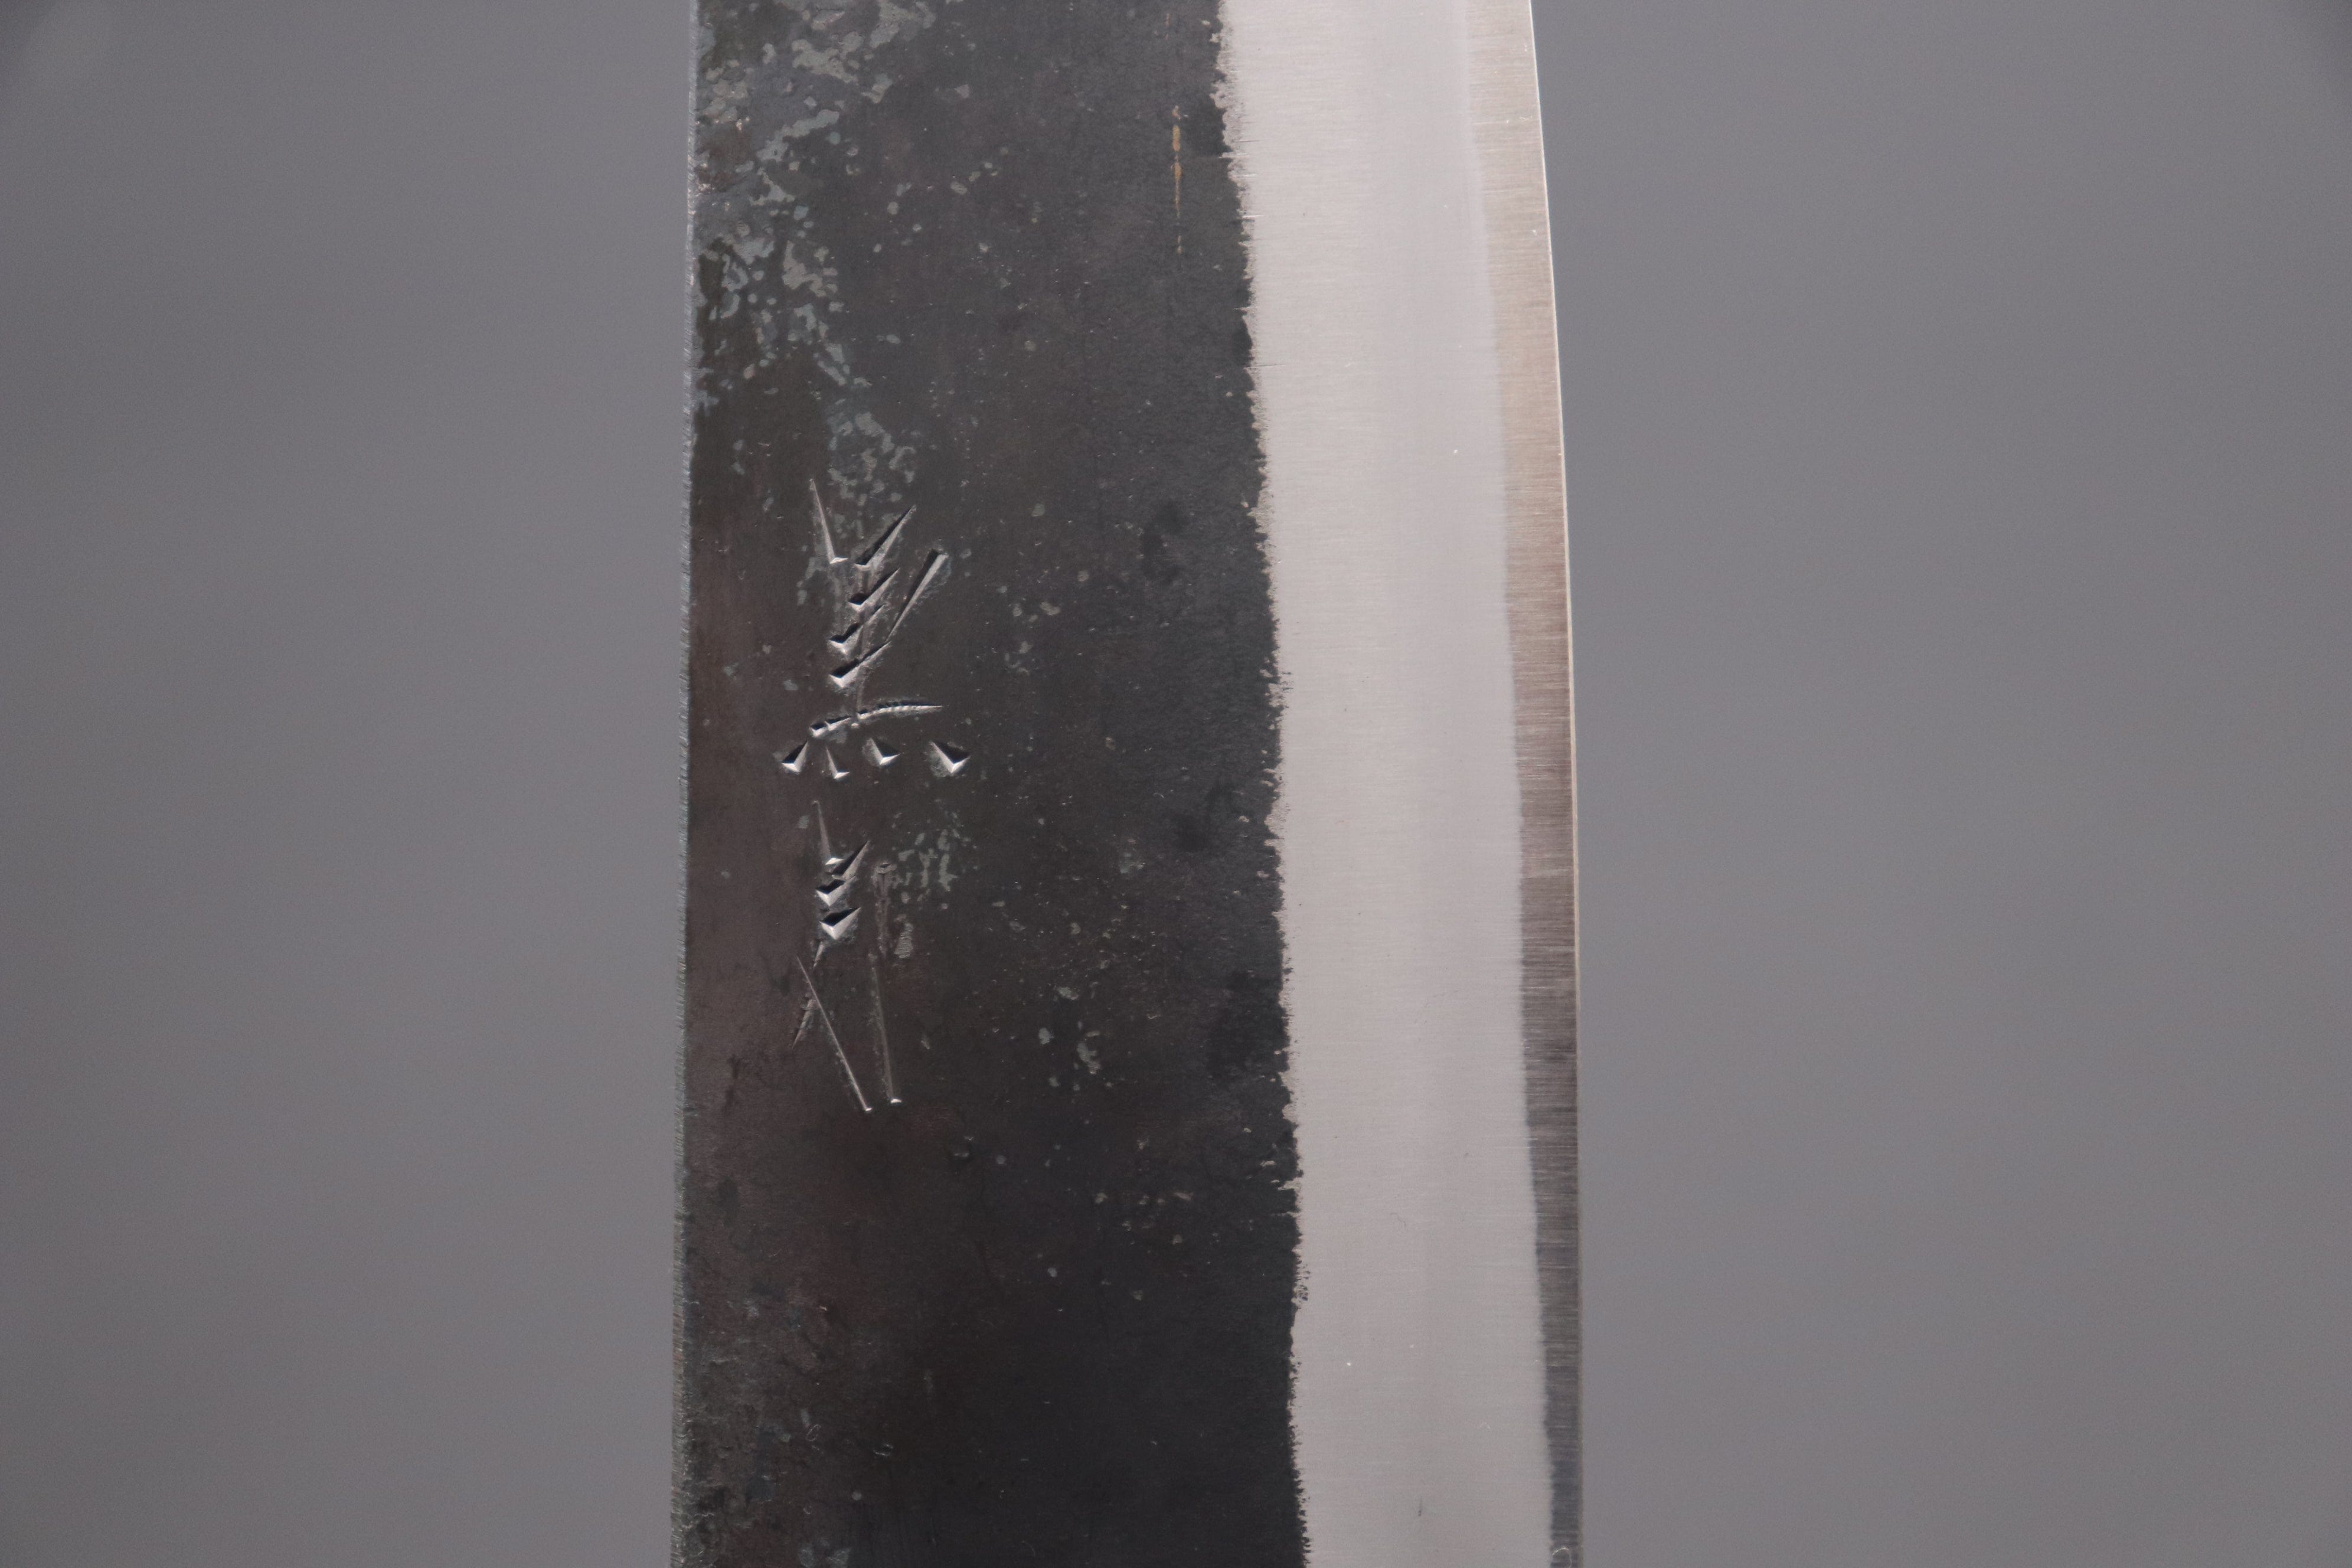 Veark x Magazin SK15 - DLC Black Forged Santoku Knife